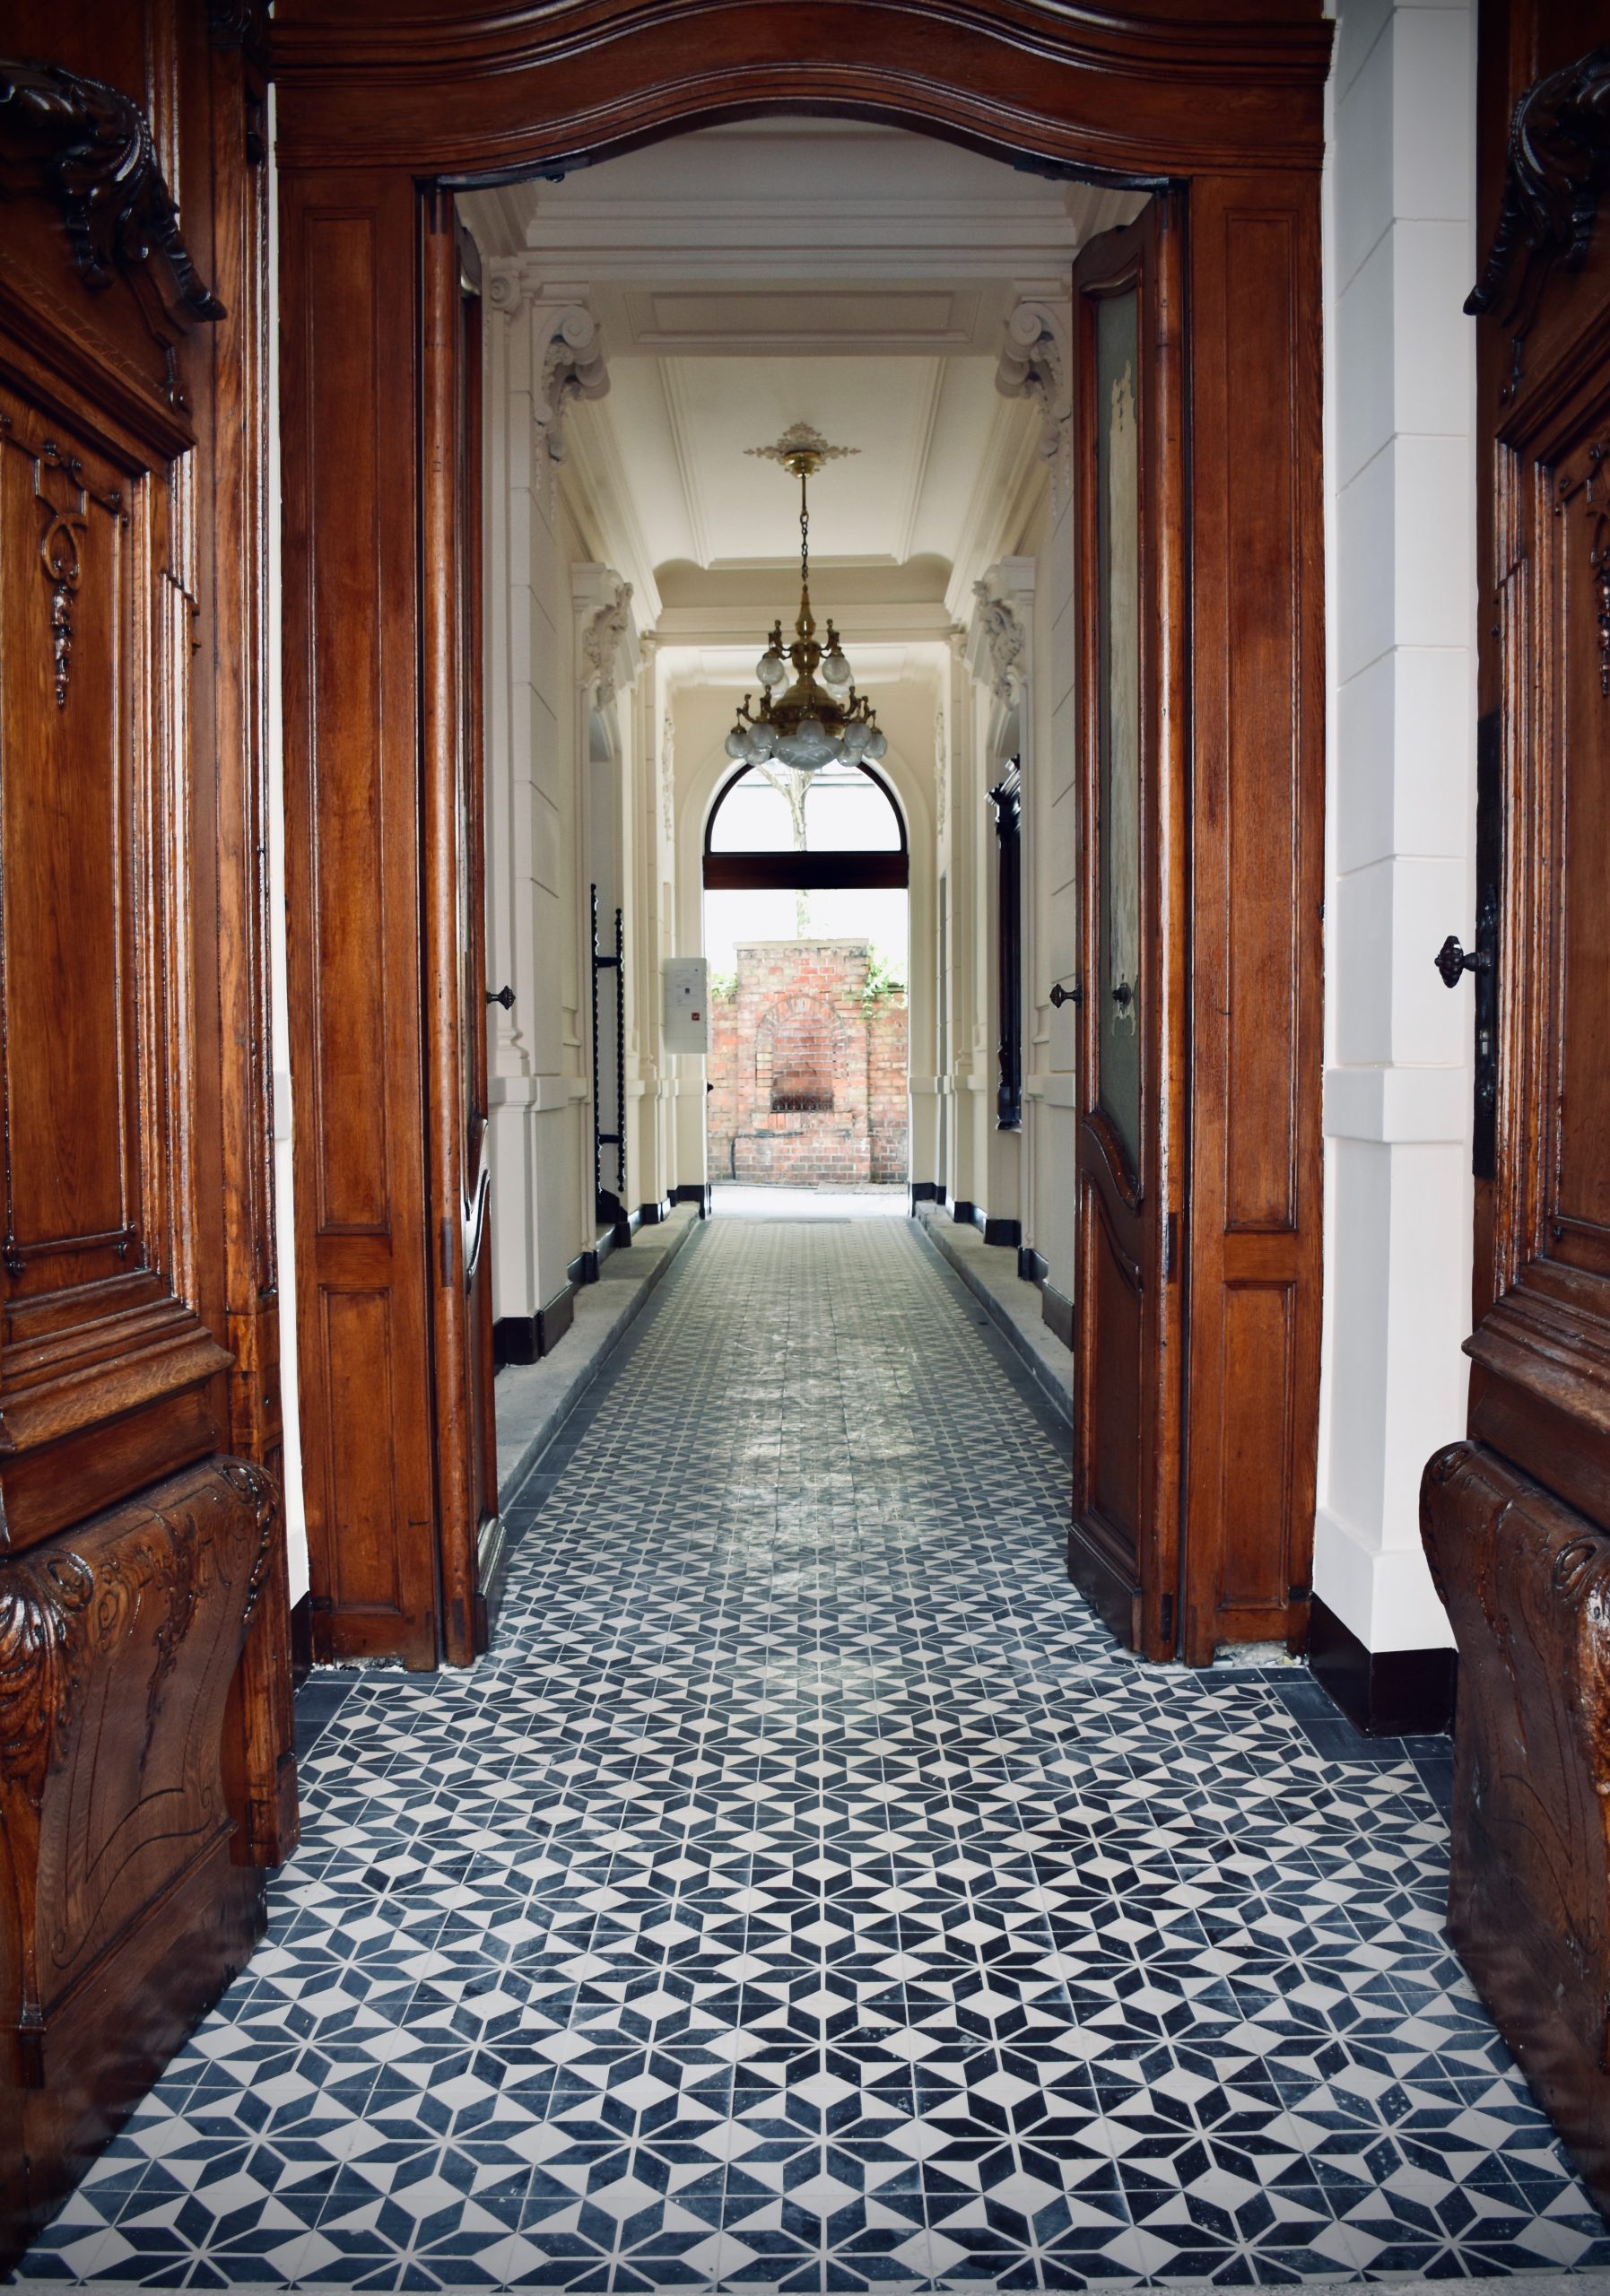 Hallway with tiles as the floor